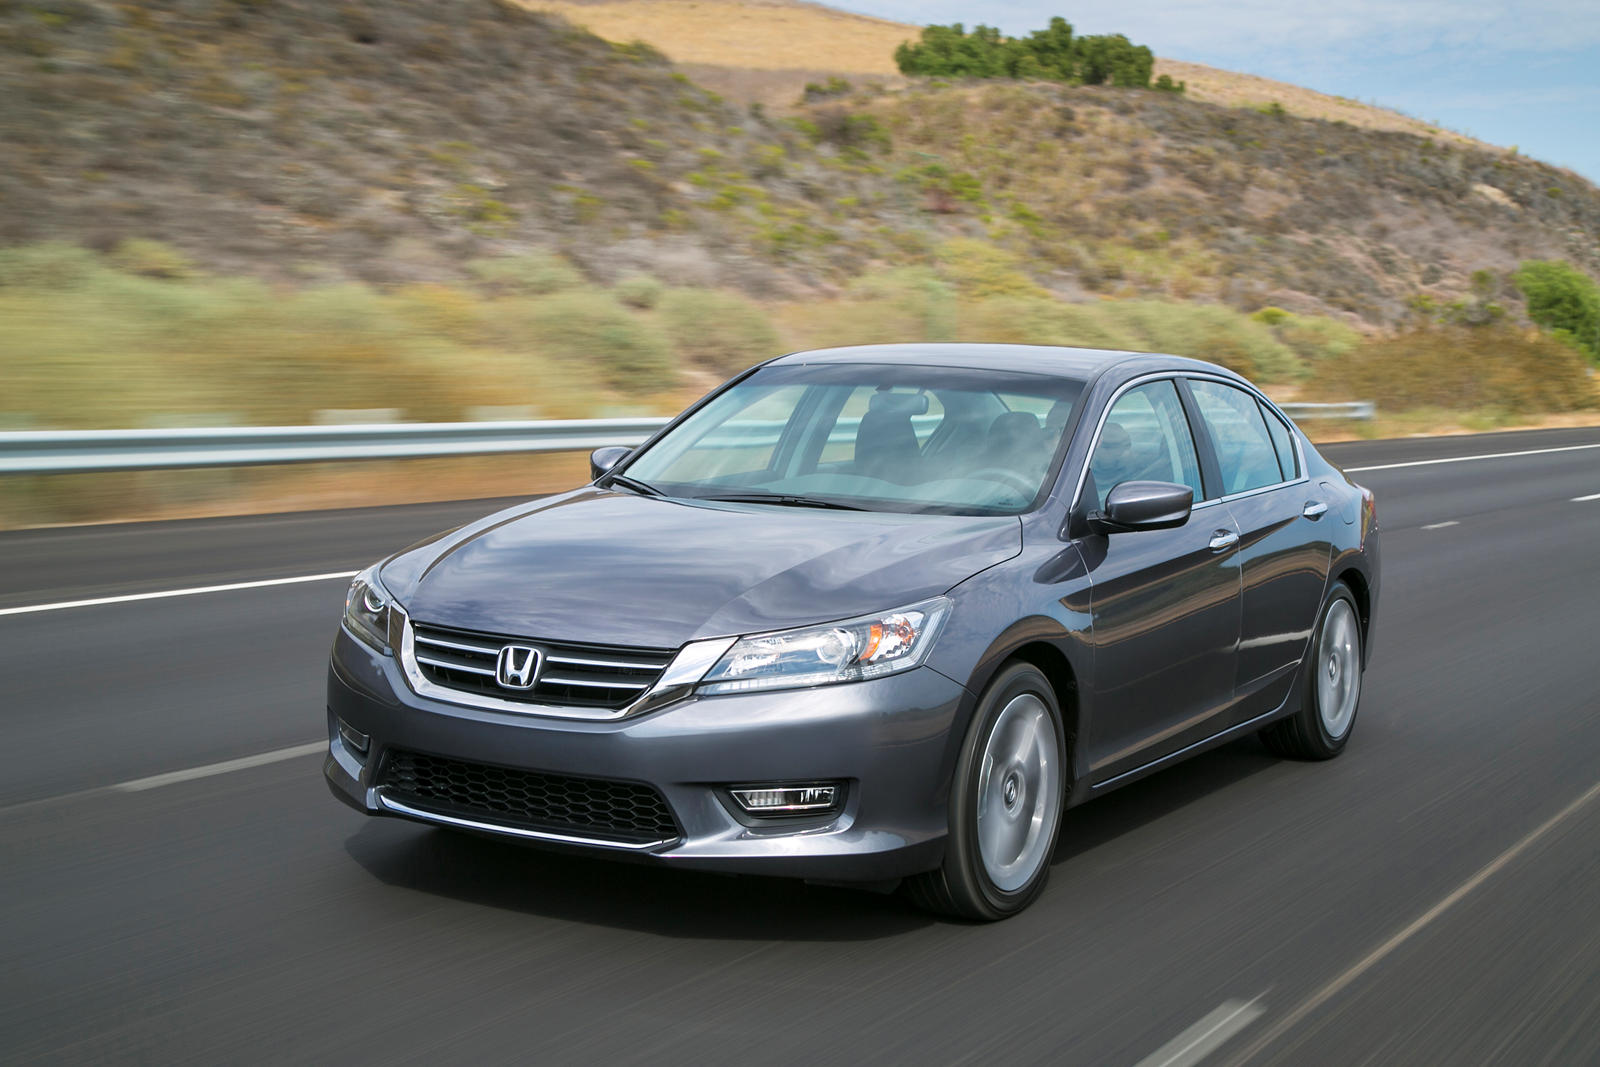 2015 Honda Accord Sedan: Review, Trims, Specs, Price, New Interior ...